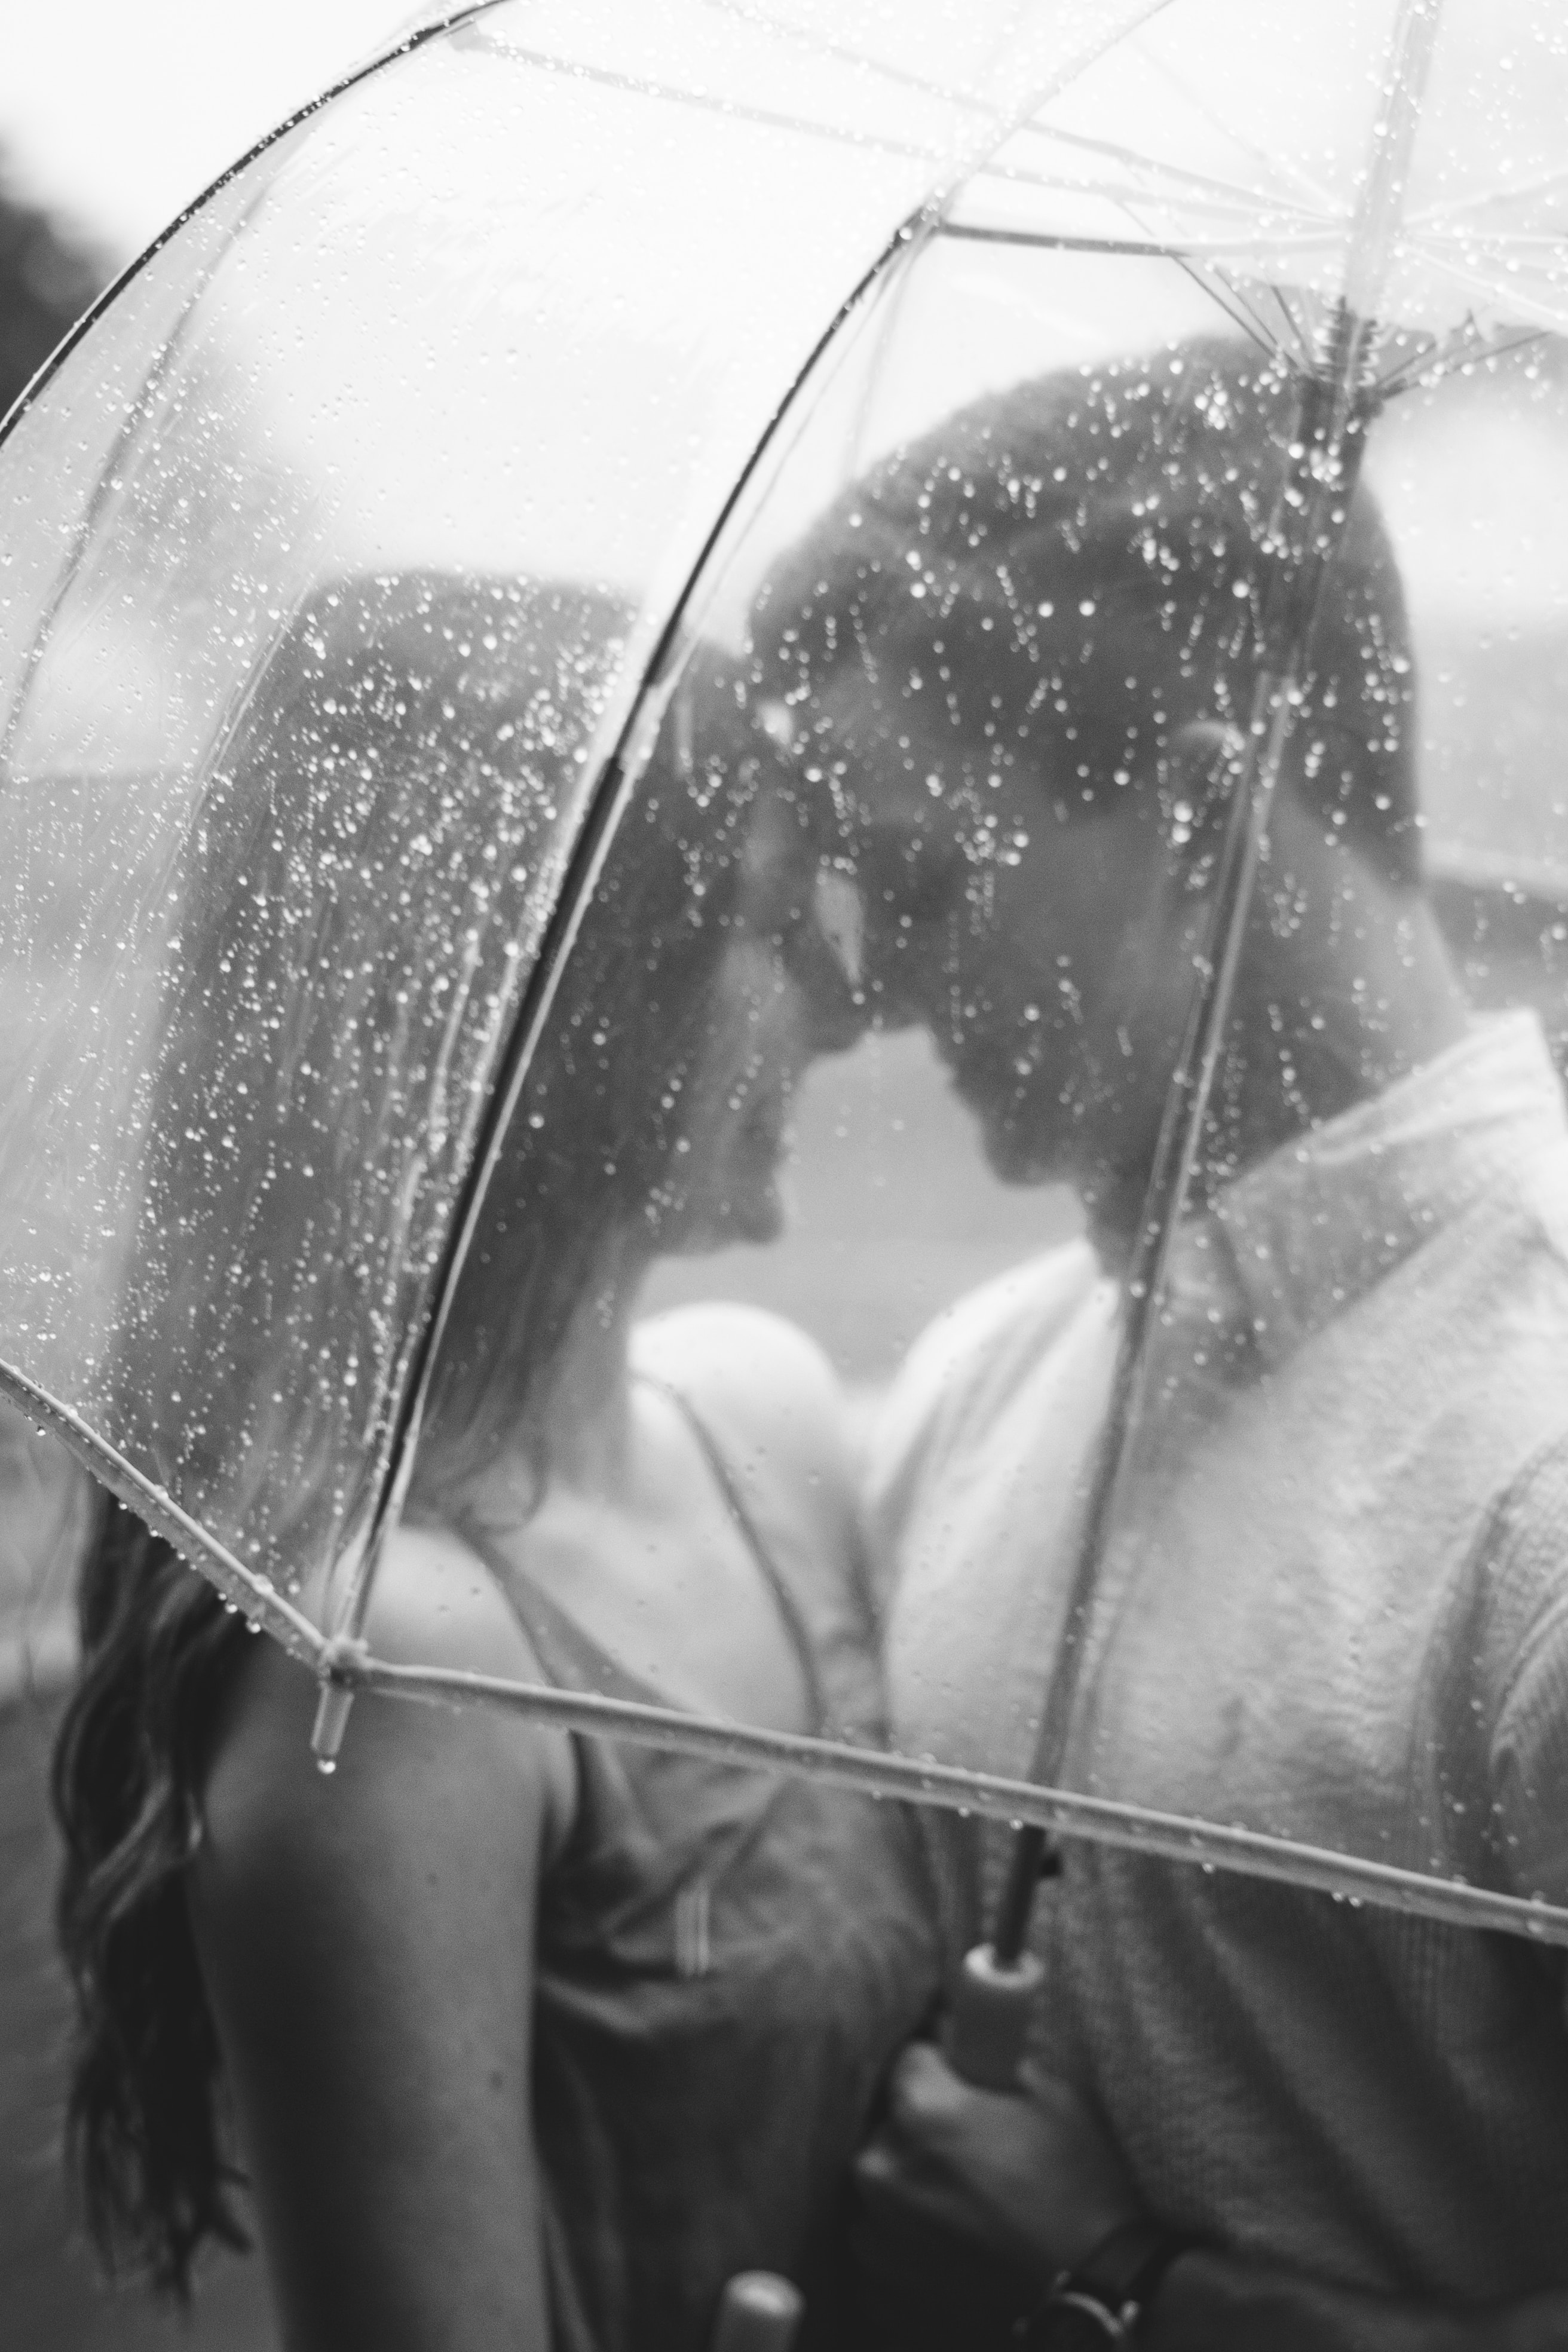 Romantic couple under an umbrella. | Source: Unsplash